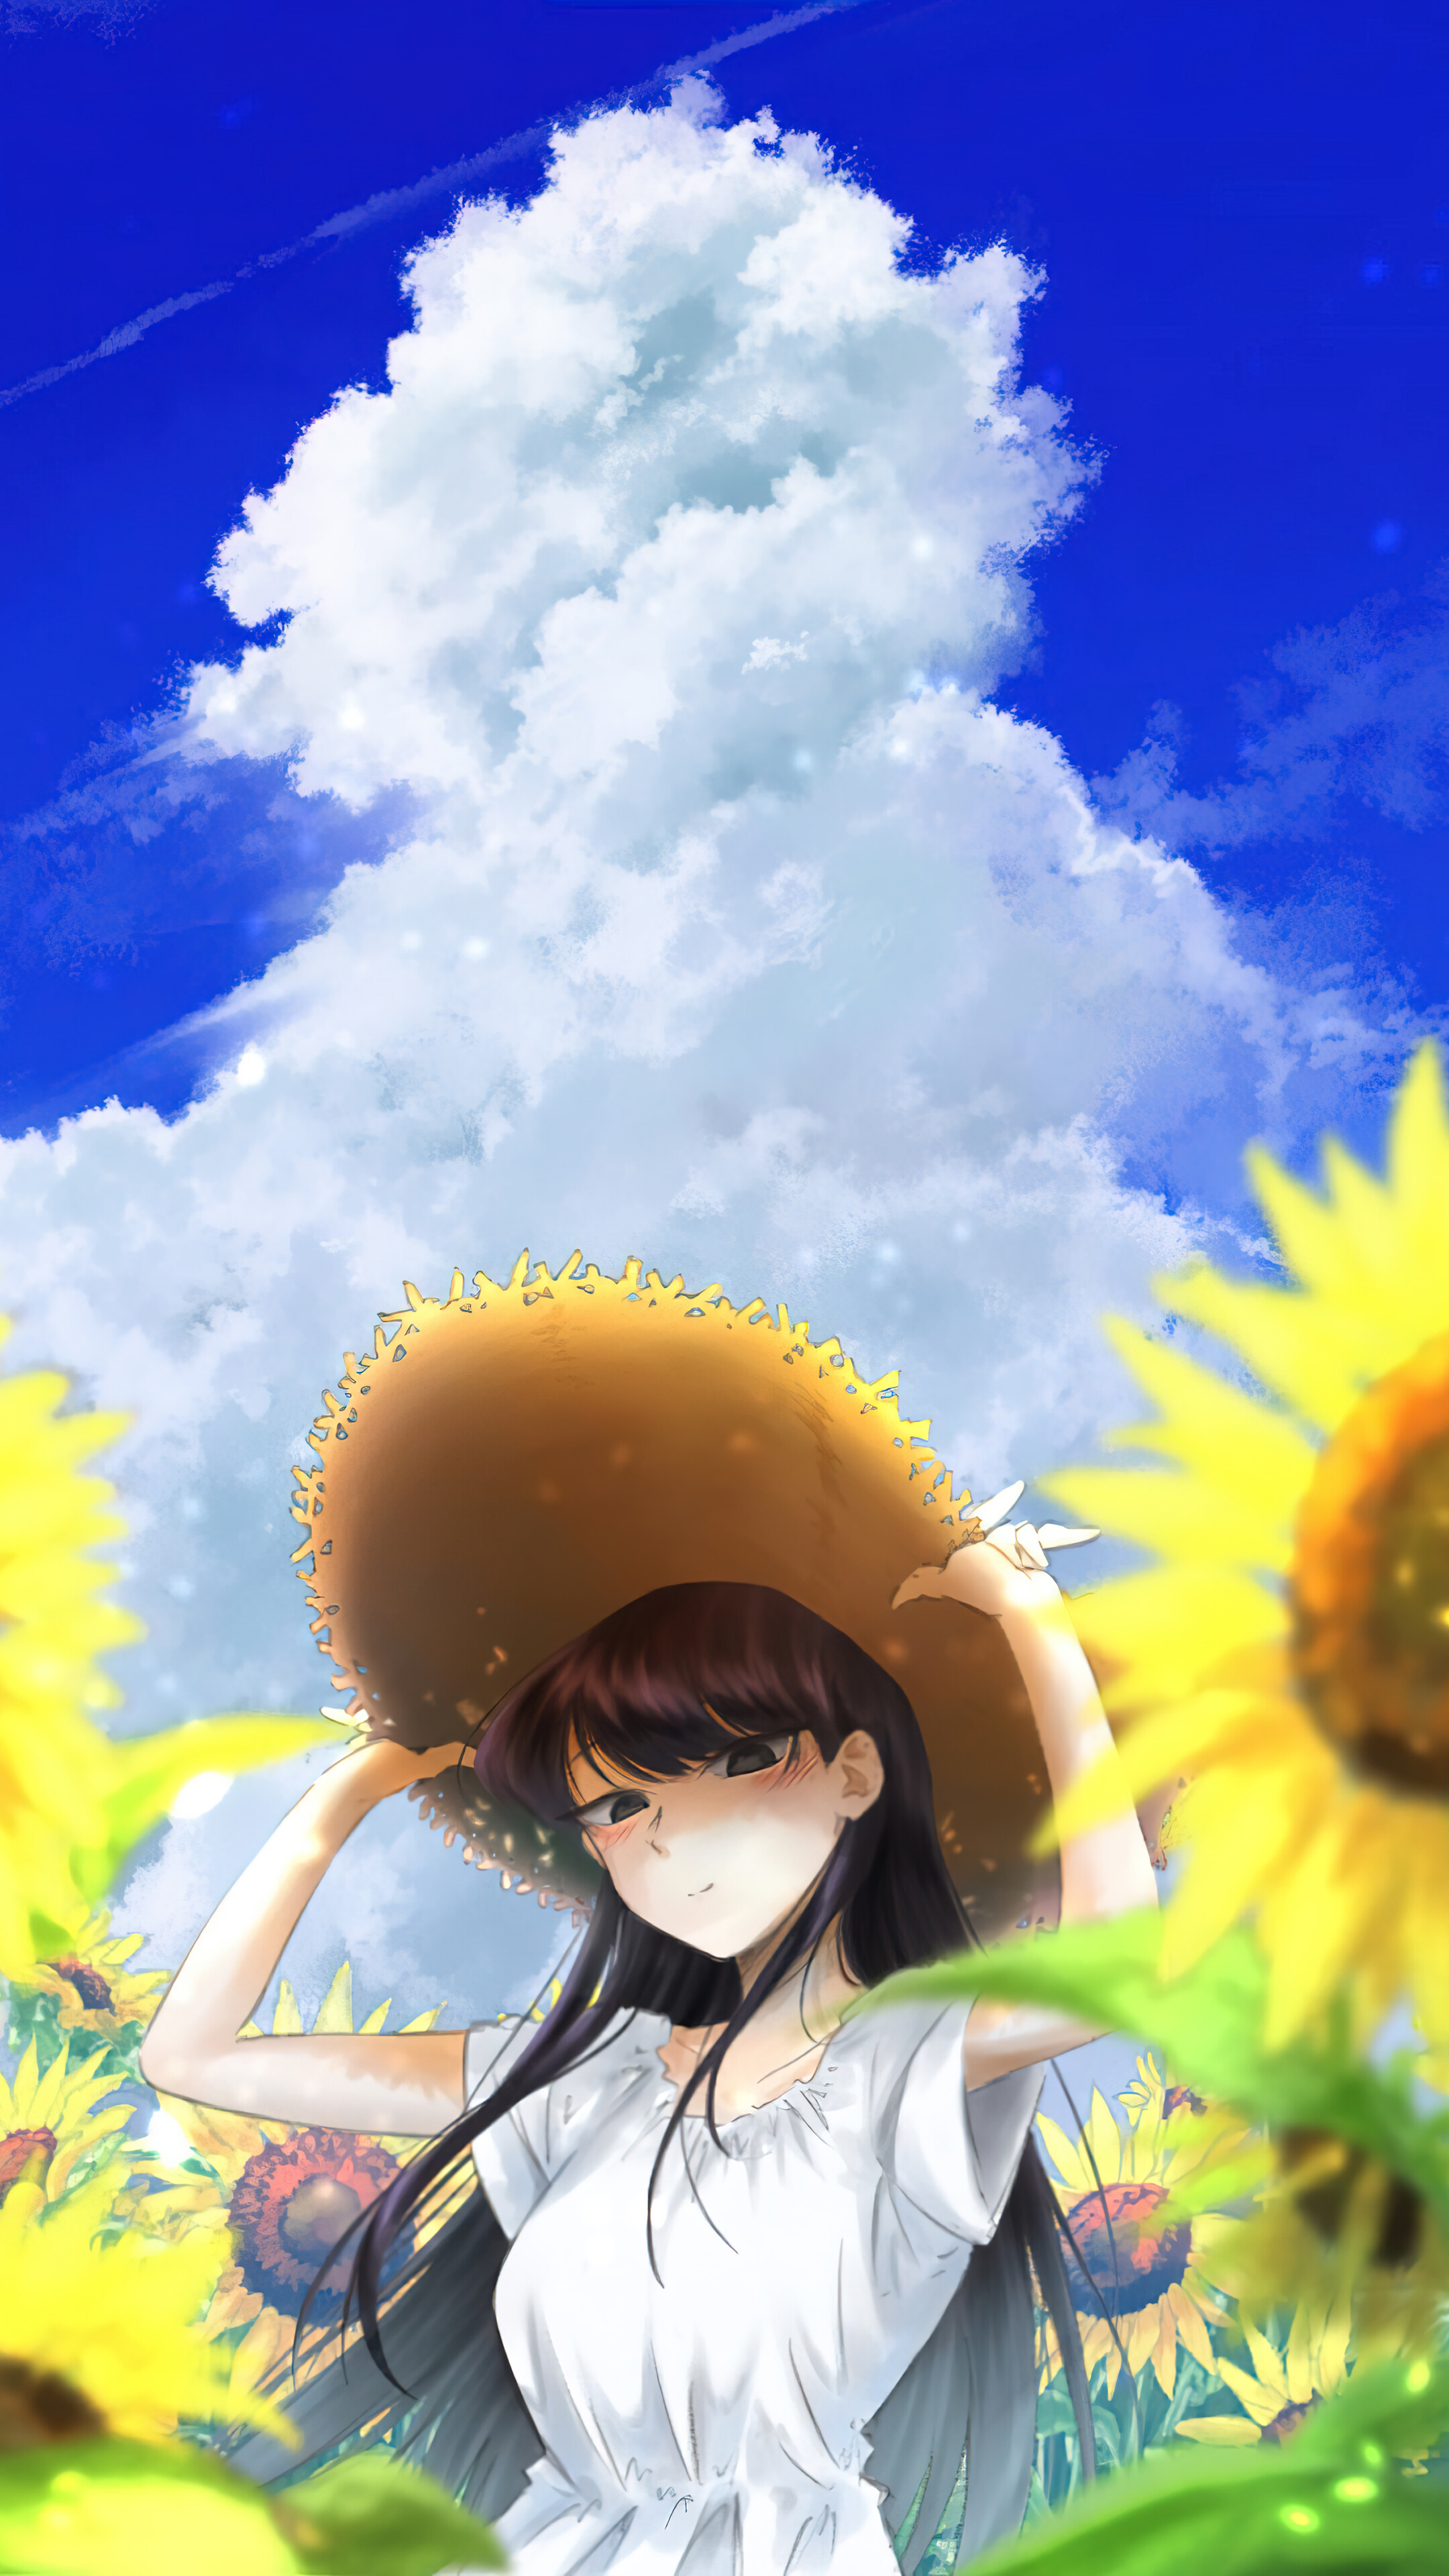 Komi san Sunflower 4K Phone iPhone Wallpaper 2871c